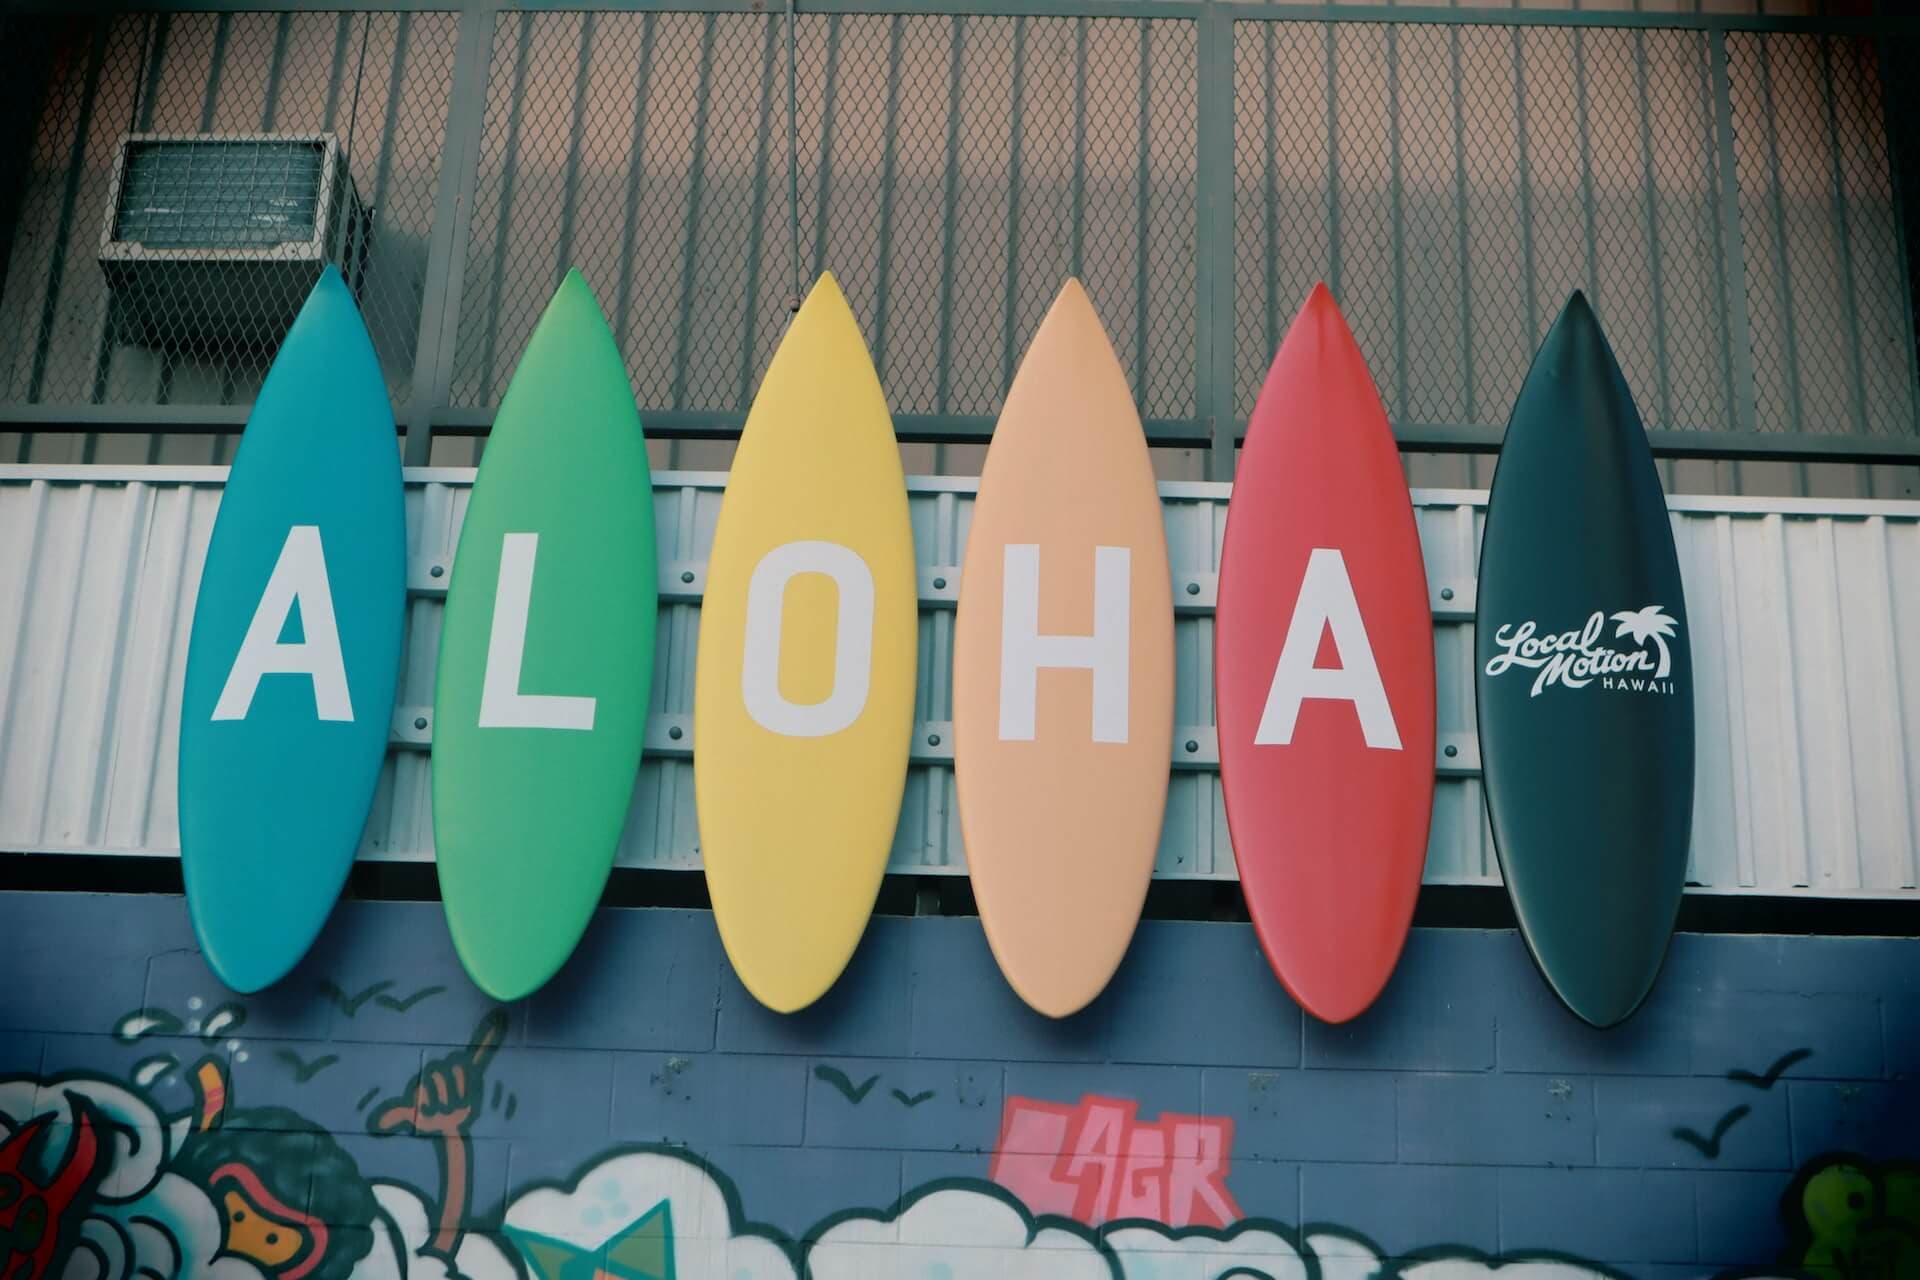 Surfboards spell Aloha in Hawaiʻi